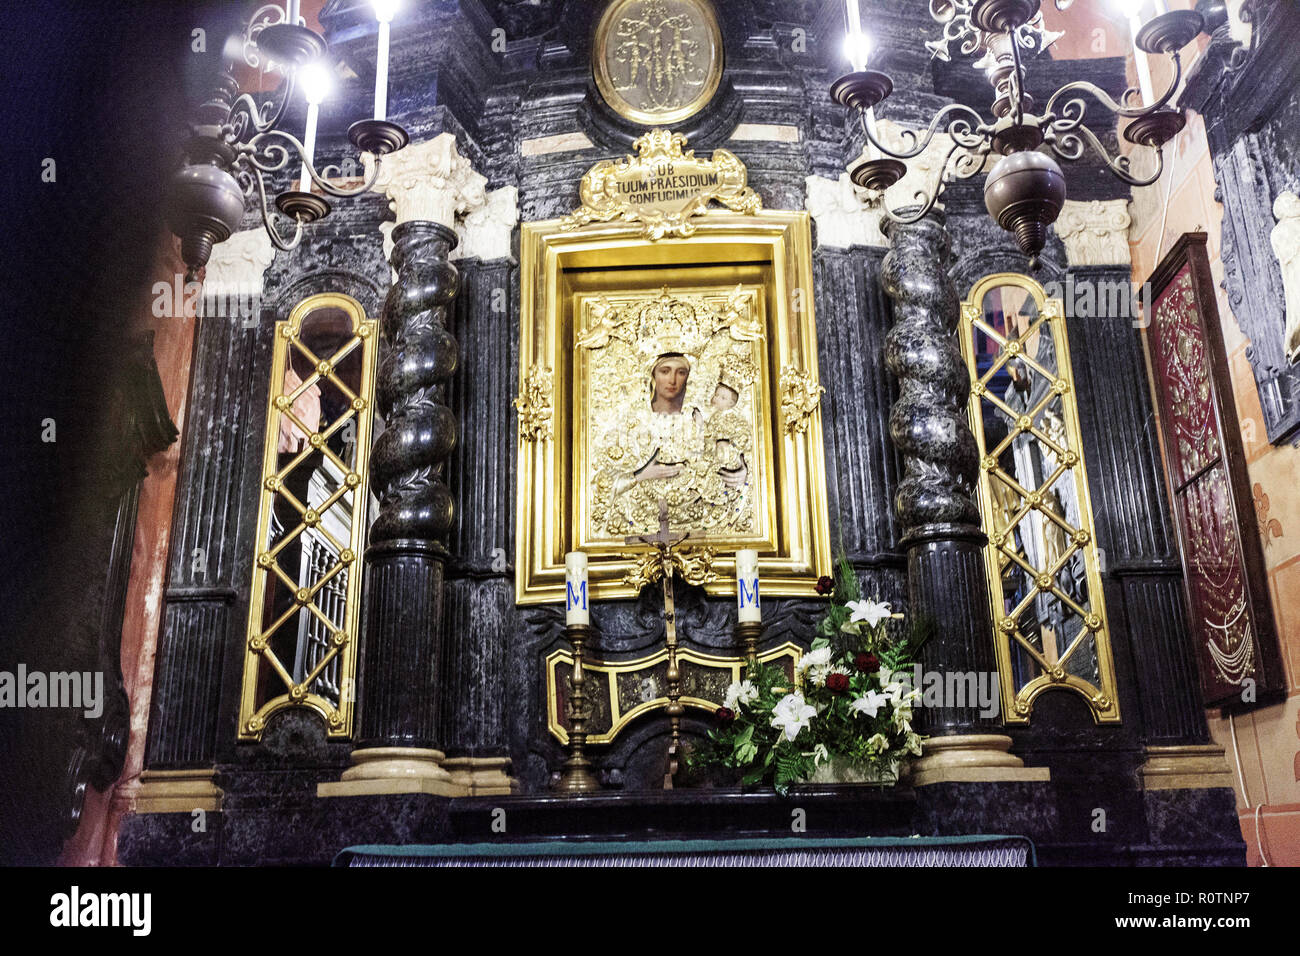 Interior of St Mary's Basilica, Krakow, Poland    Photo © Federico Meneghetti/Sintesi/Alamy Stock Photo Stock Photo